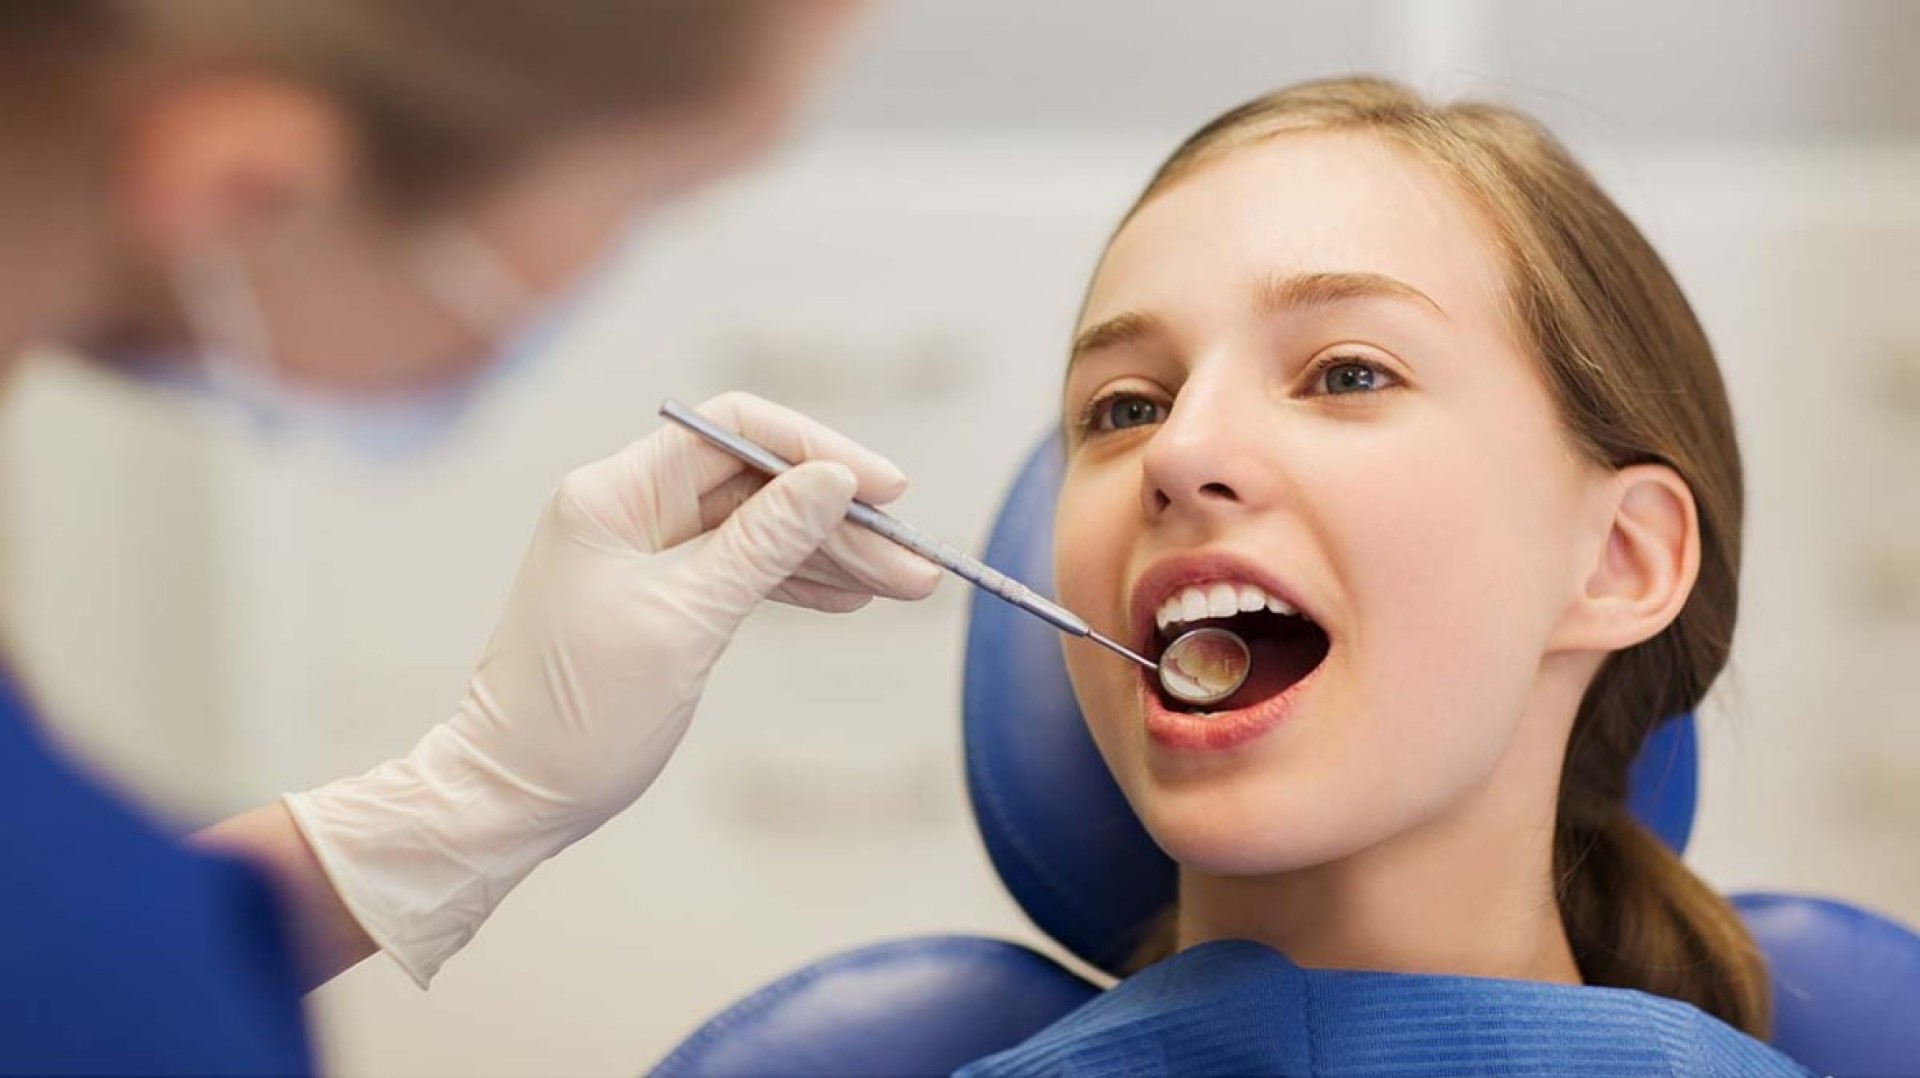 Dentist Pass: Ενημερωθείτε έγκαιρα για τα οφέλη της ψηφιακής κάρτας